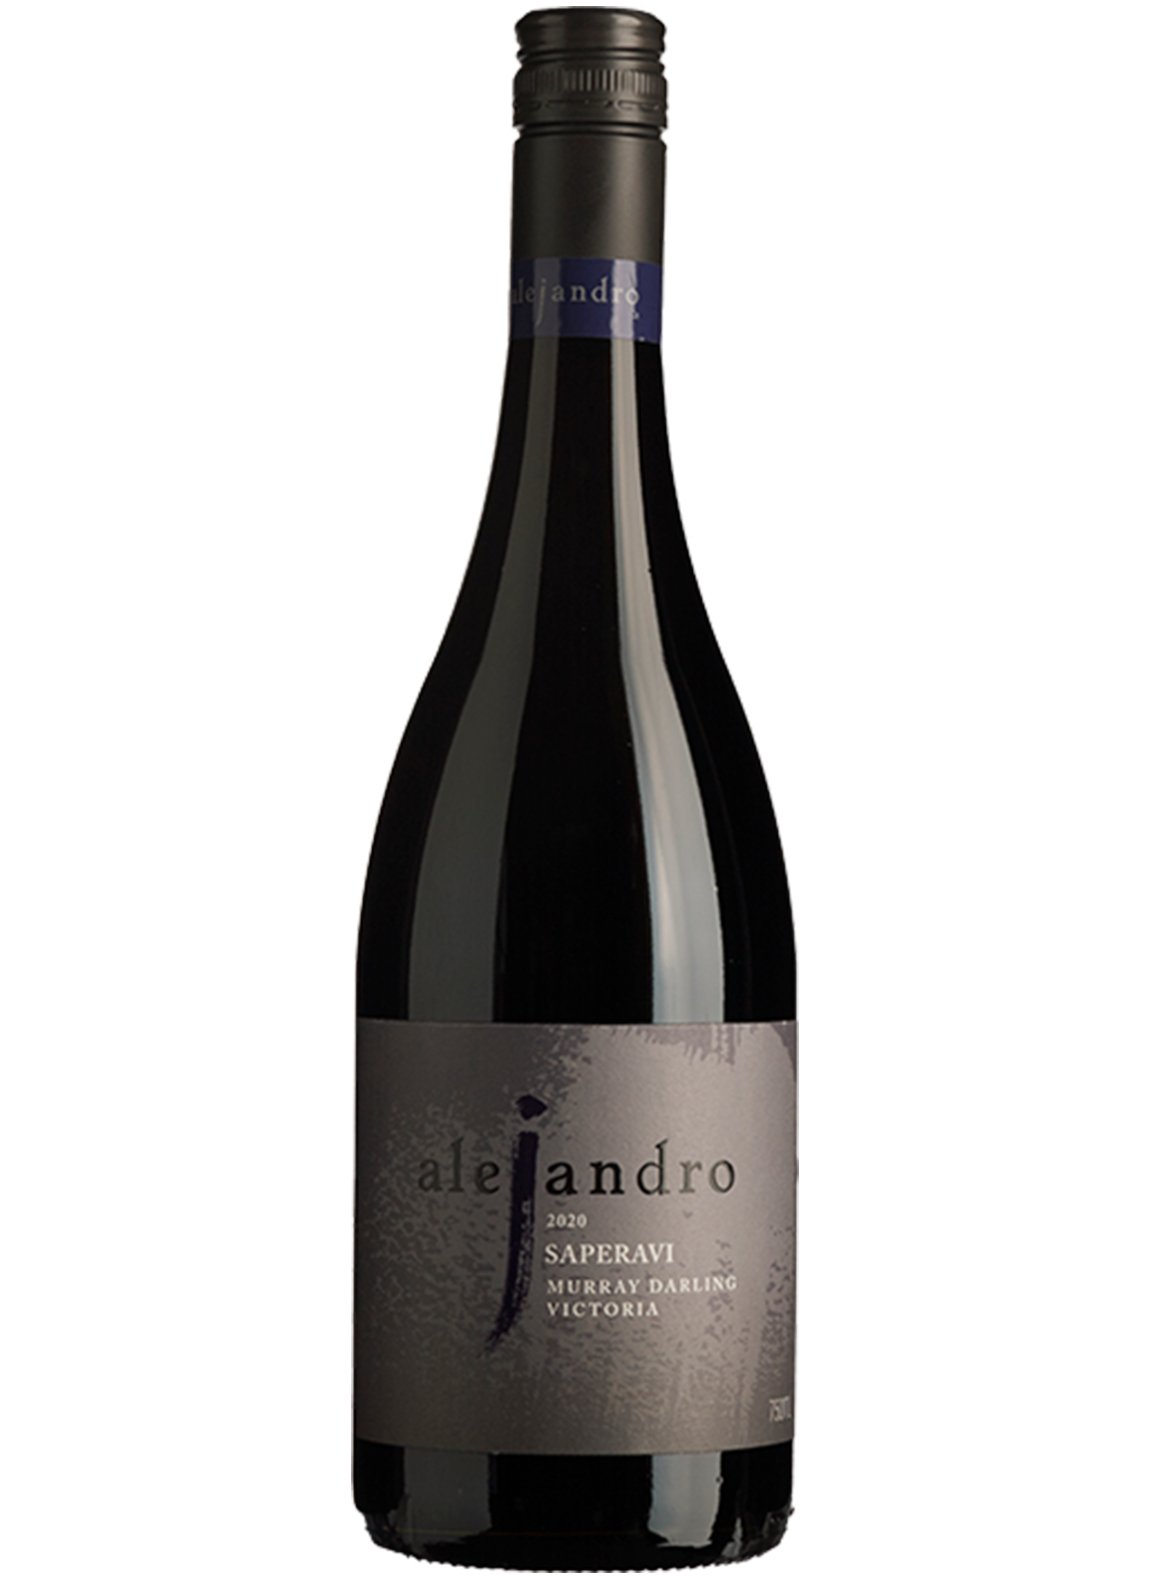 Alejandro Saperavi 2020 - Wine Australia Red - Liquor Wine Cave